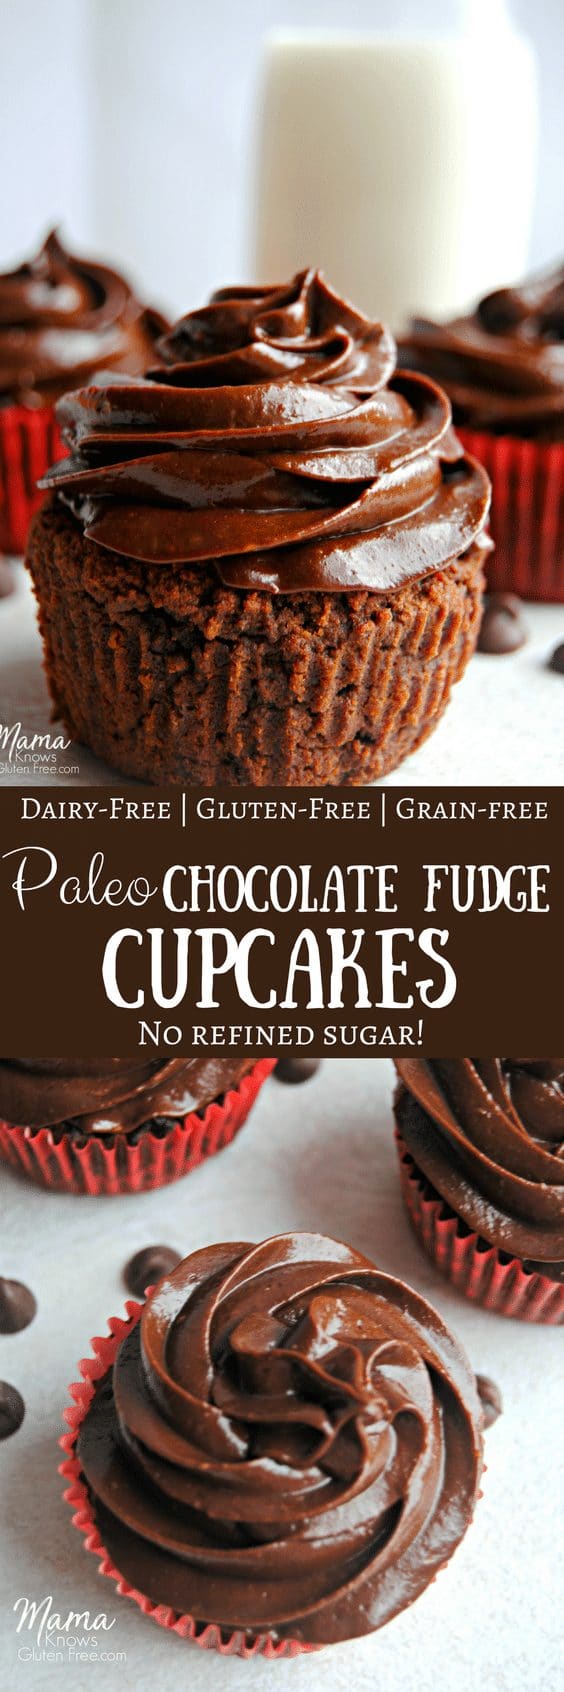 Paleo Chocolate Fudge Cupcaes